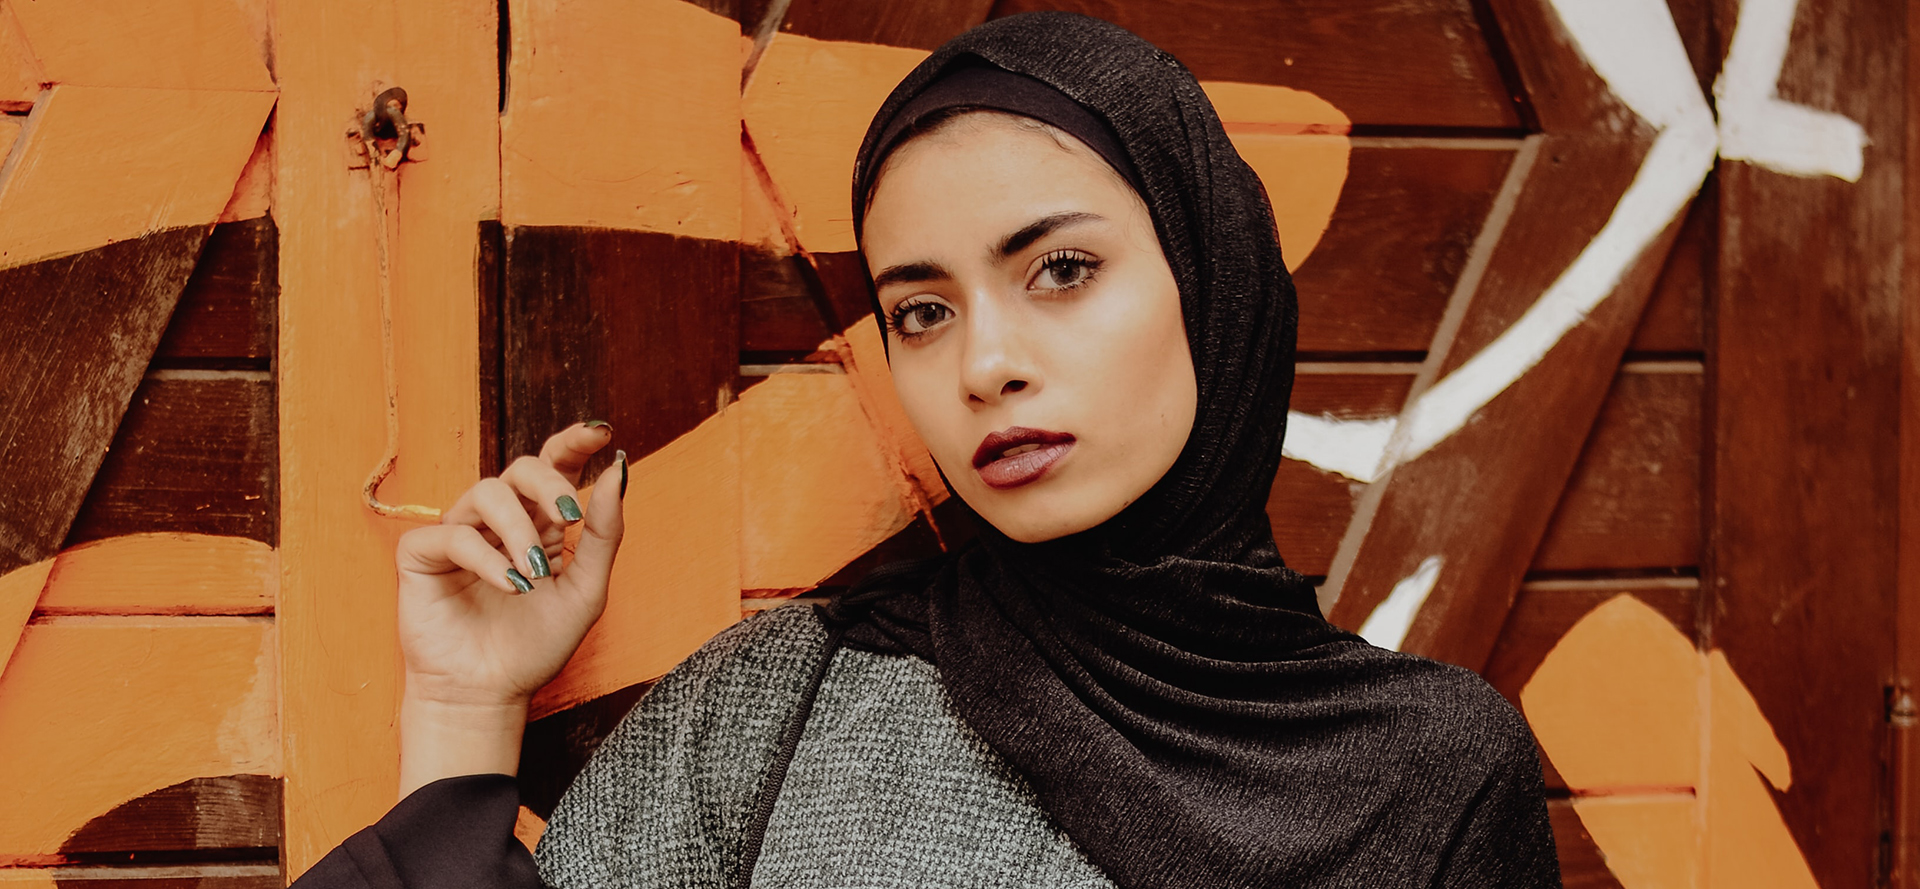 Arabisk kvinna i svart huvudduk.